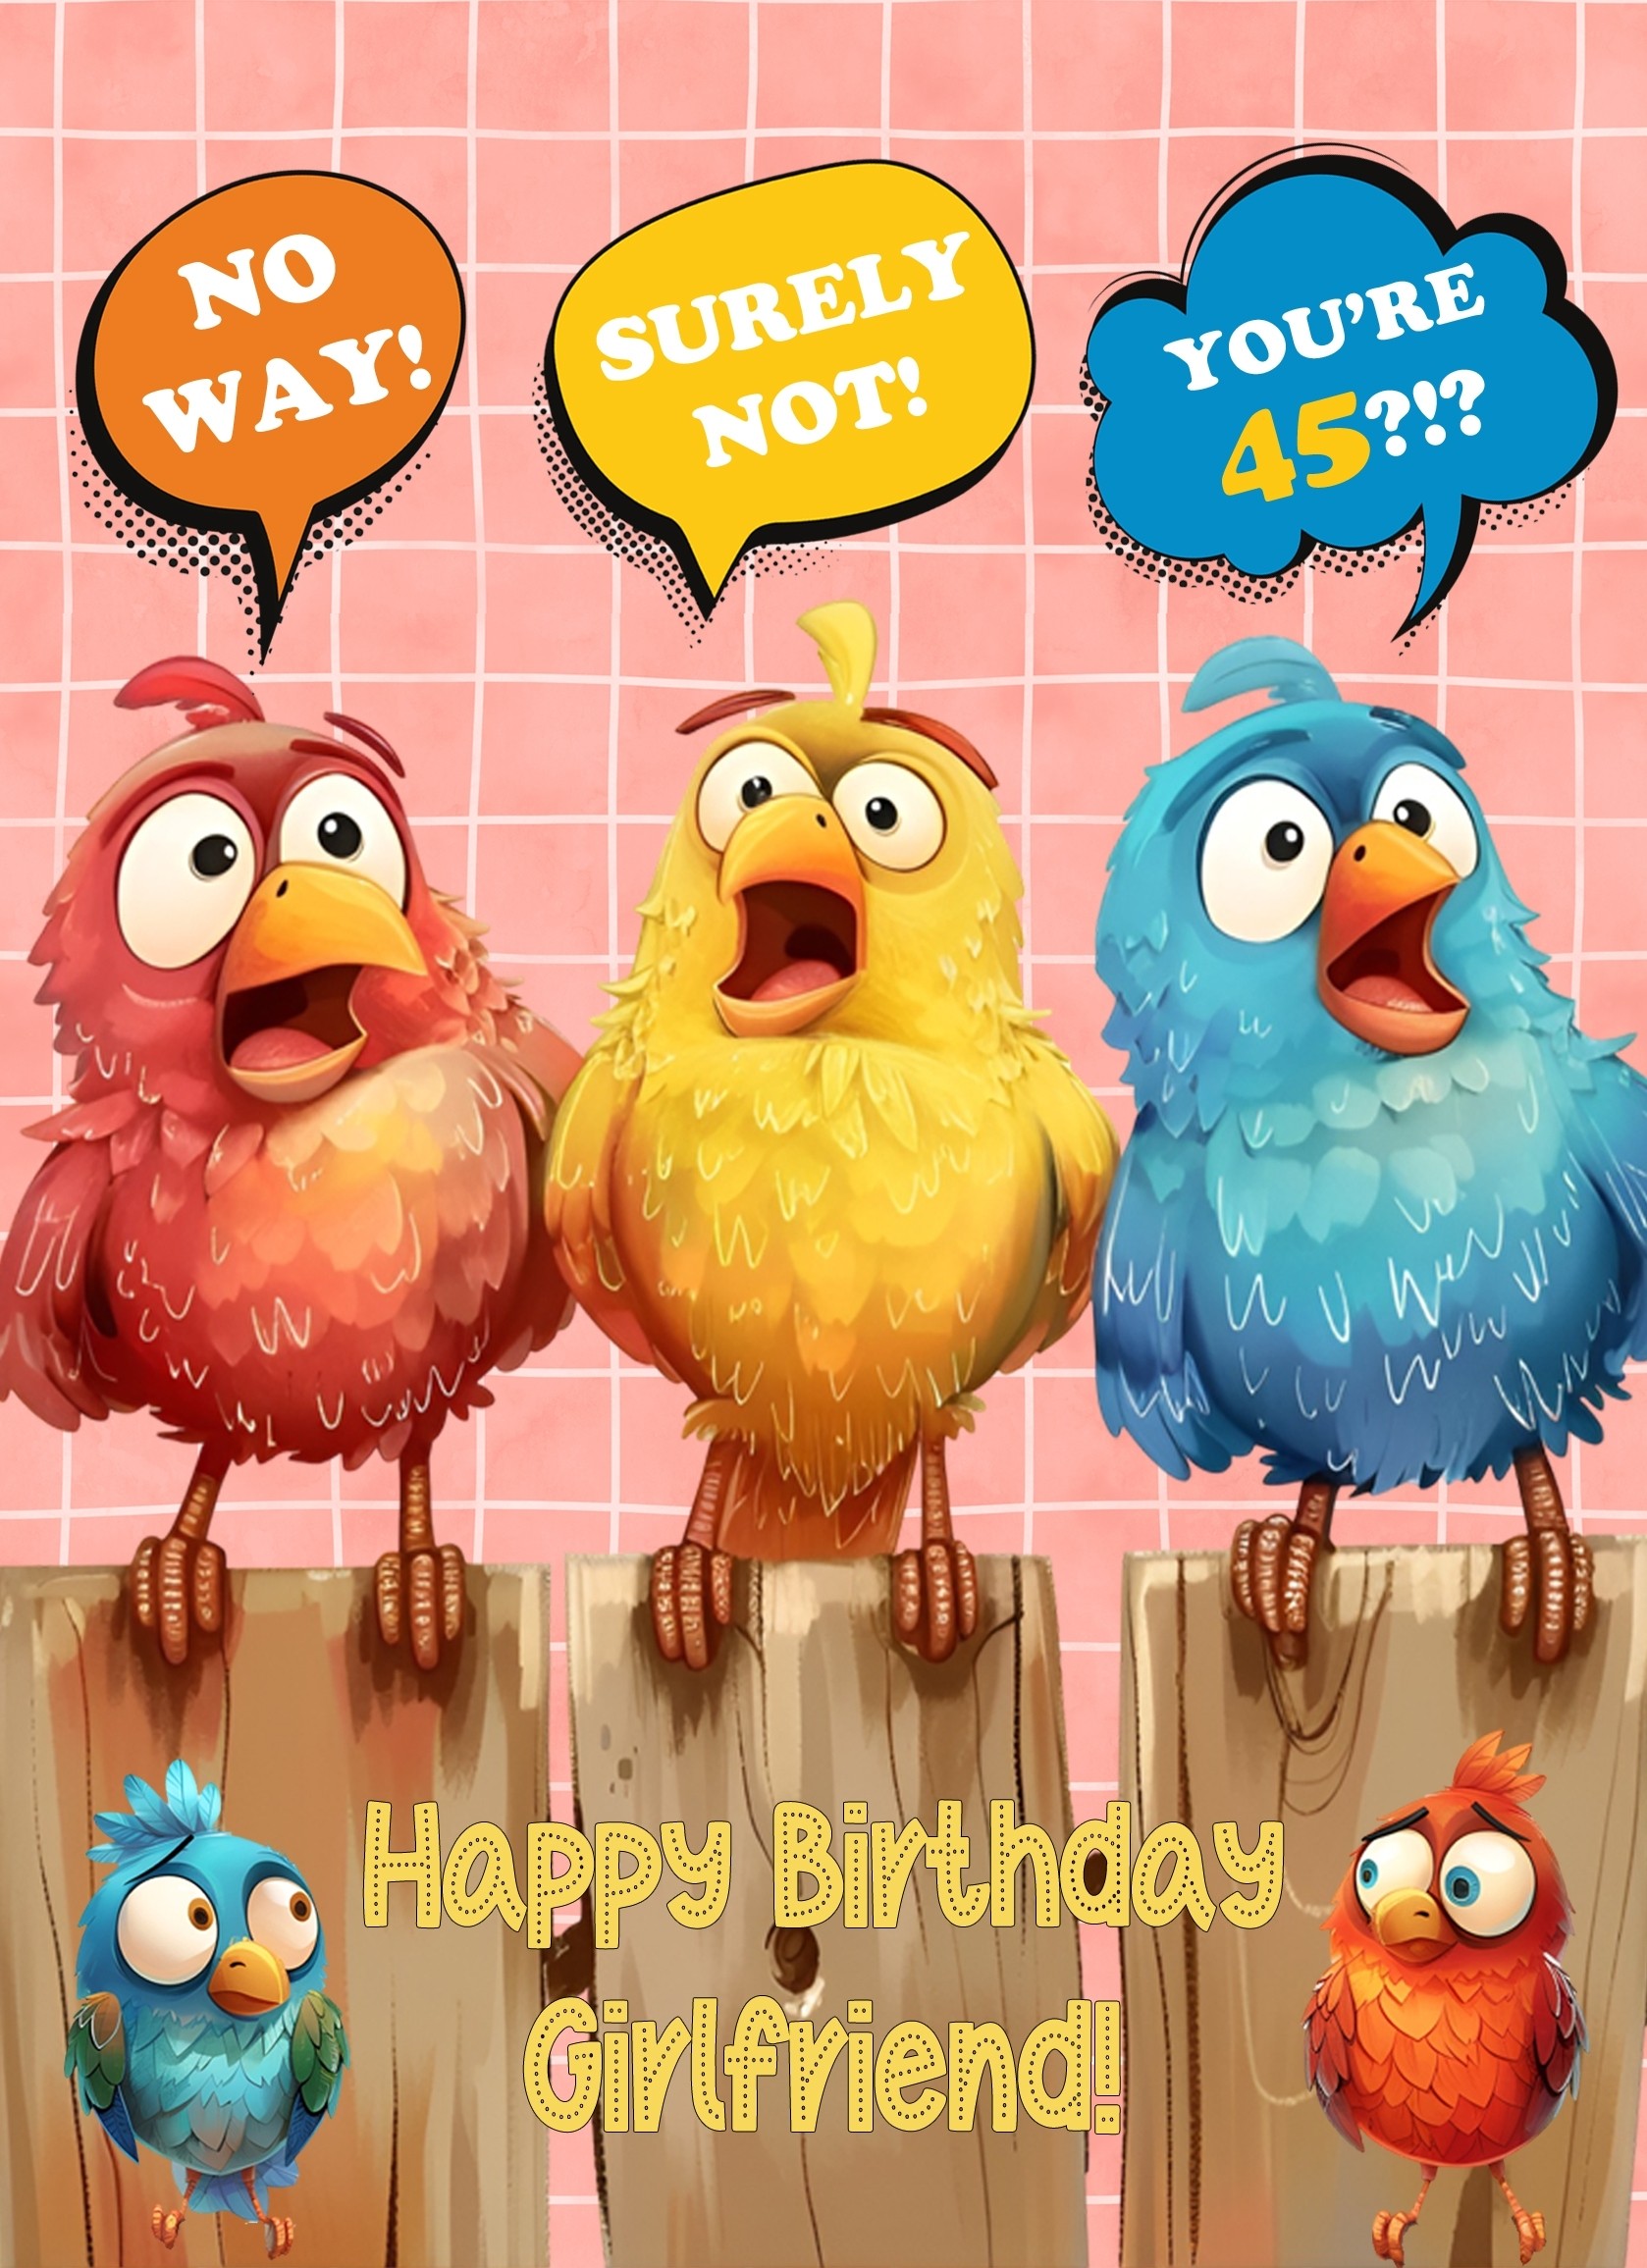 Girlfriend 45th Birthday Card (Funny Birds Surprised)